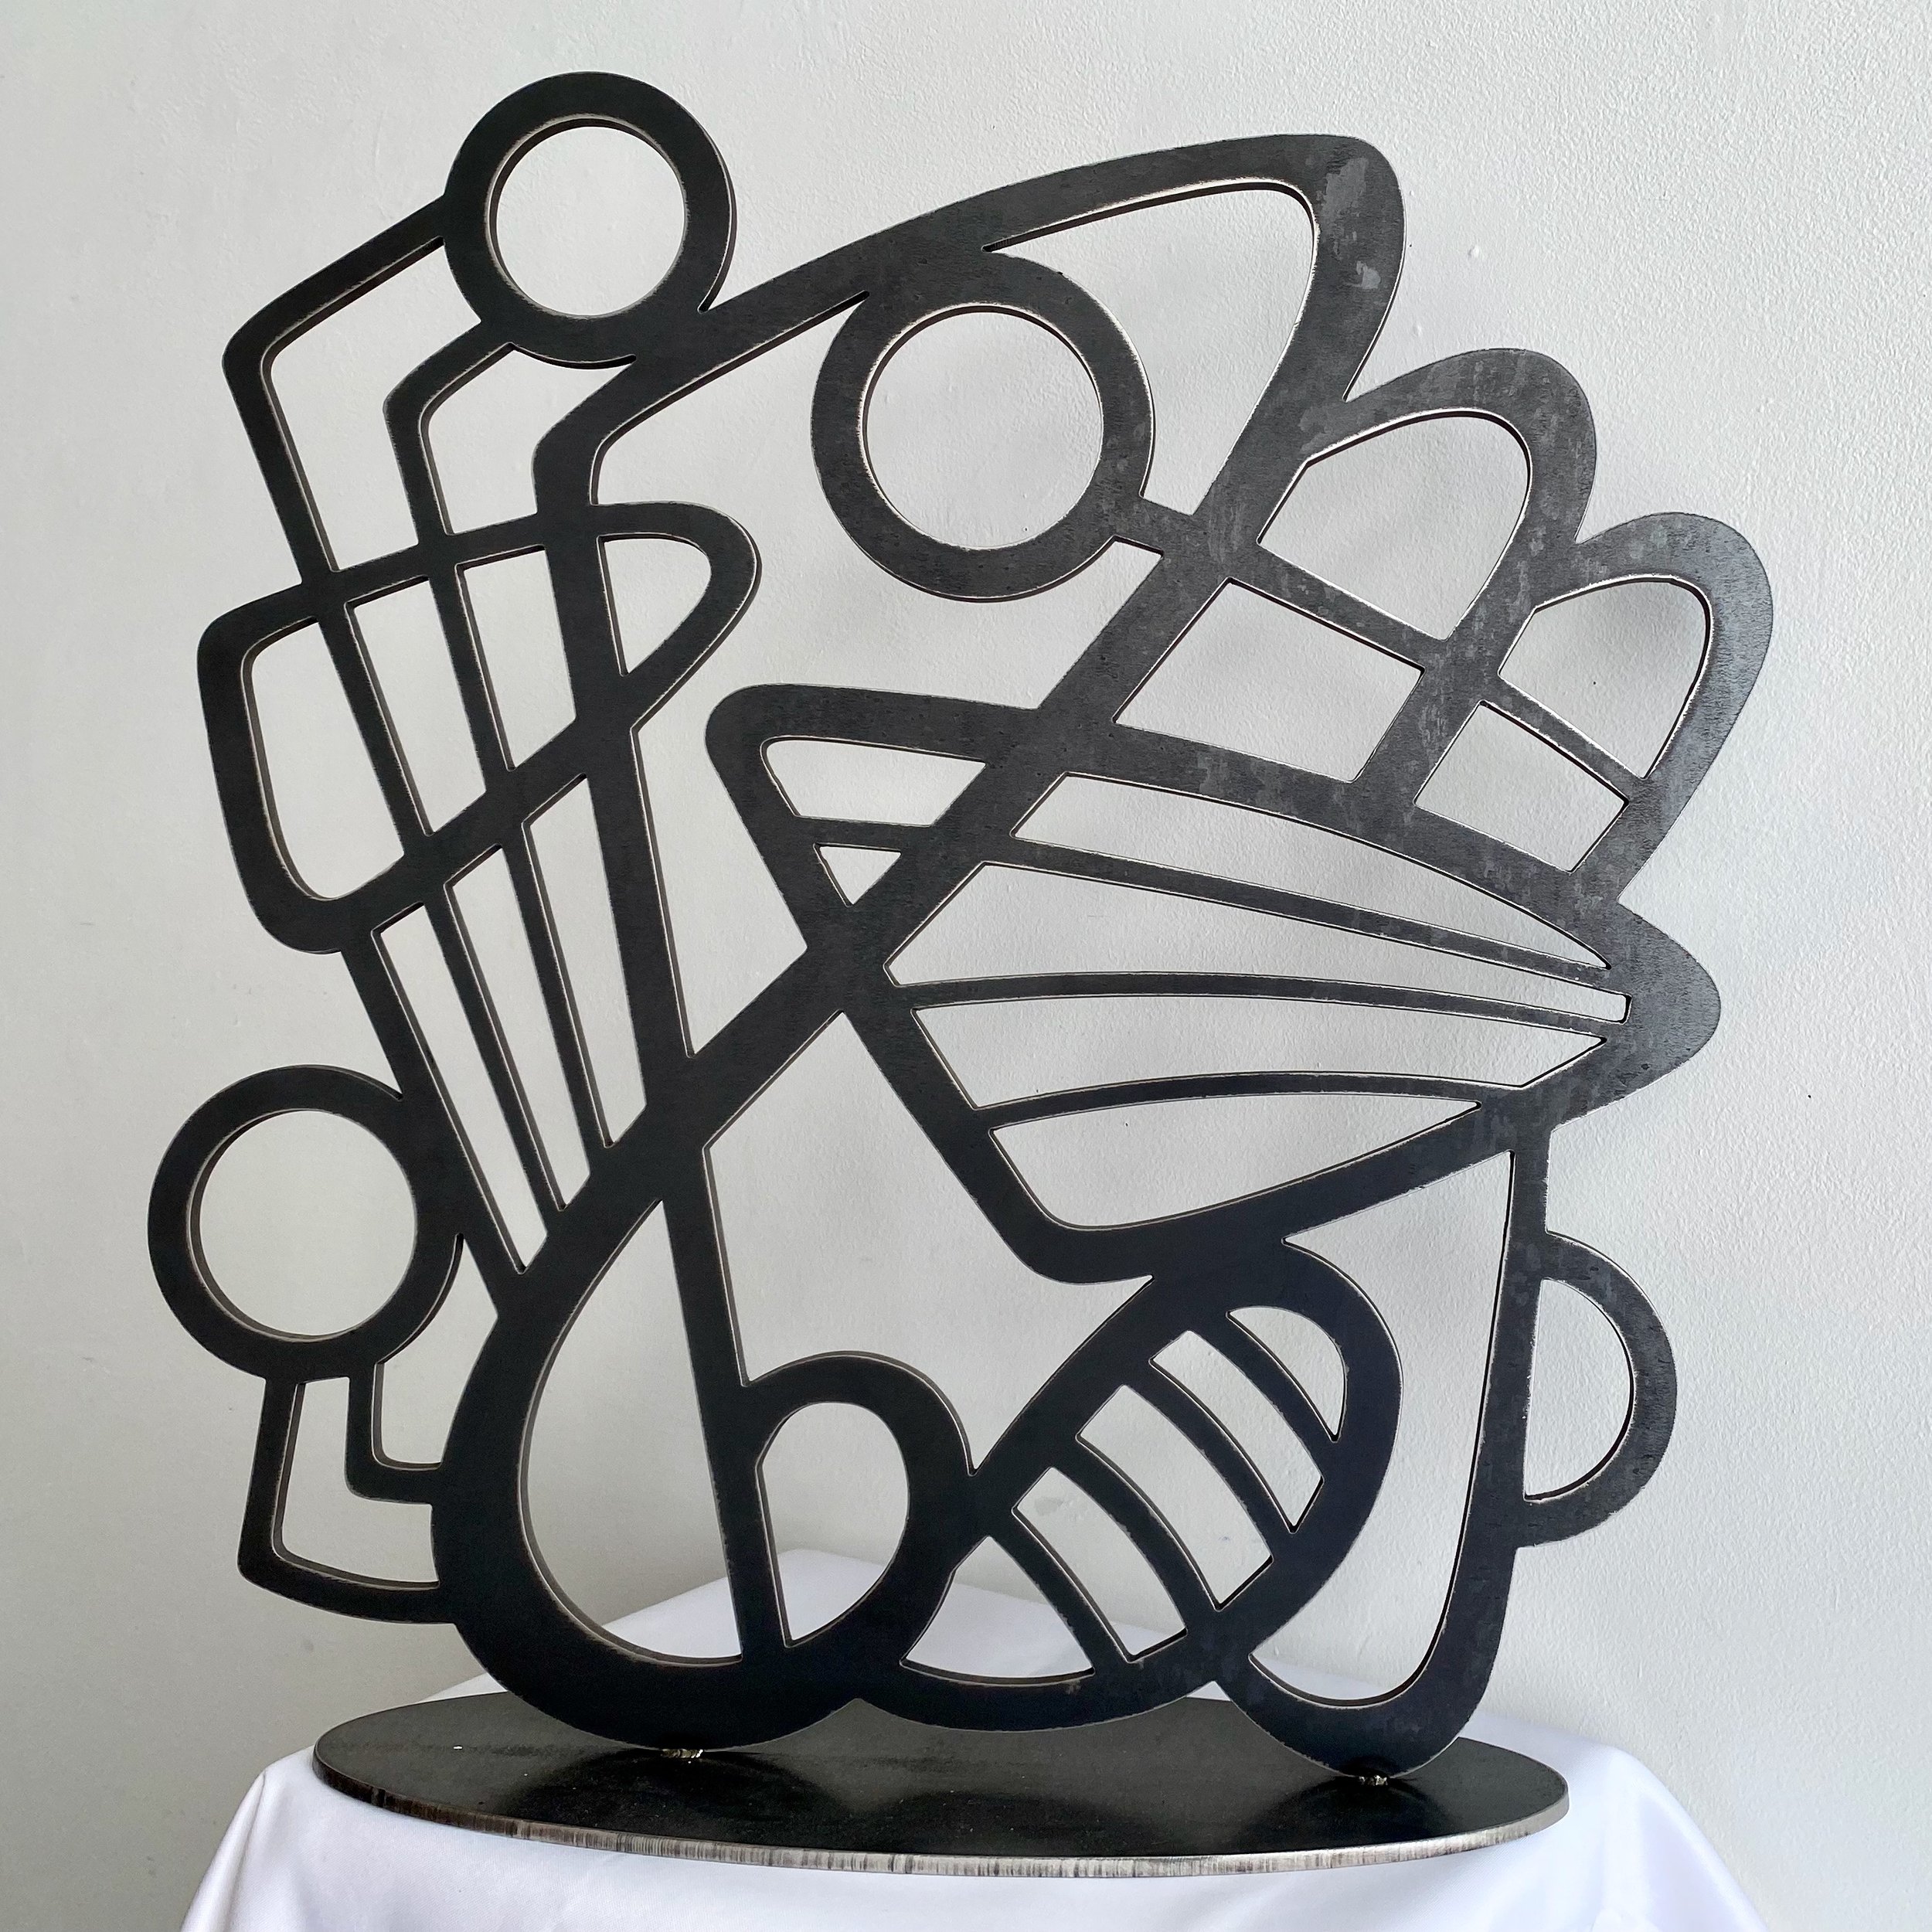 Hierro (table sculpture)